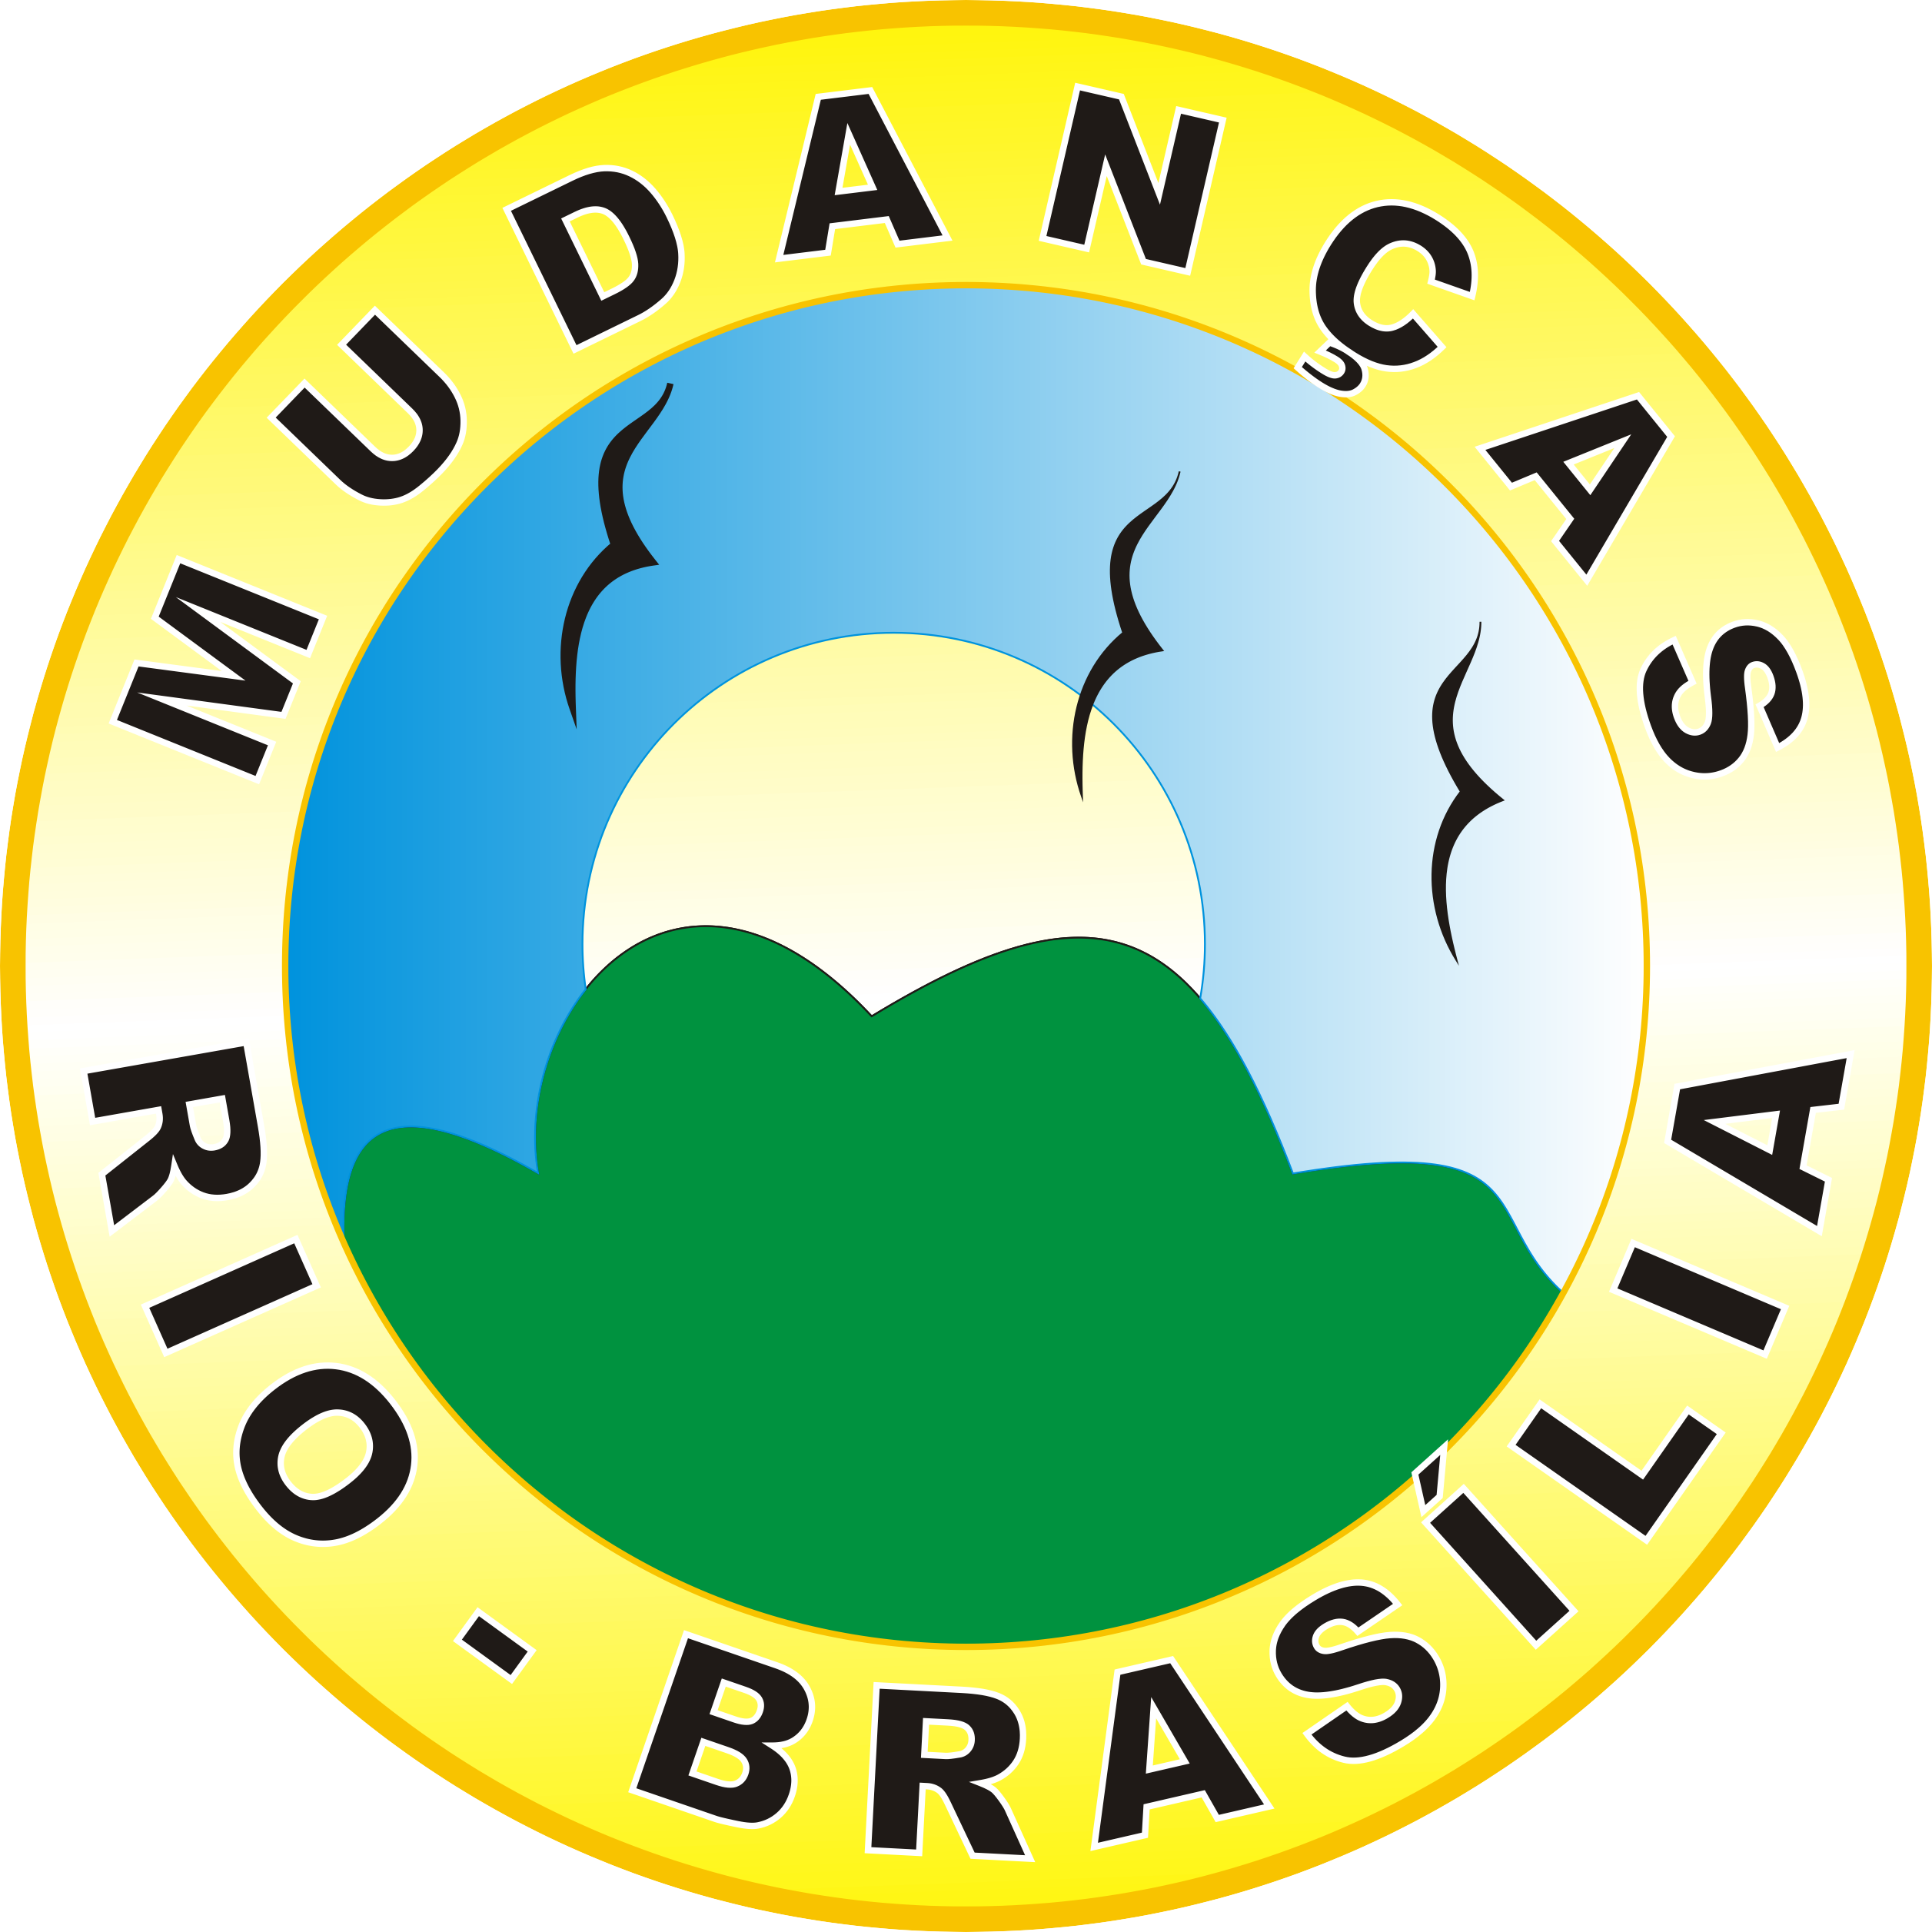 Transporte Rio Brasilia